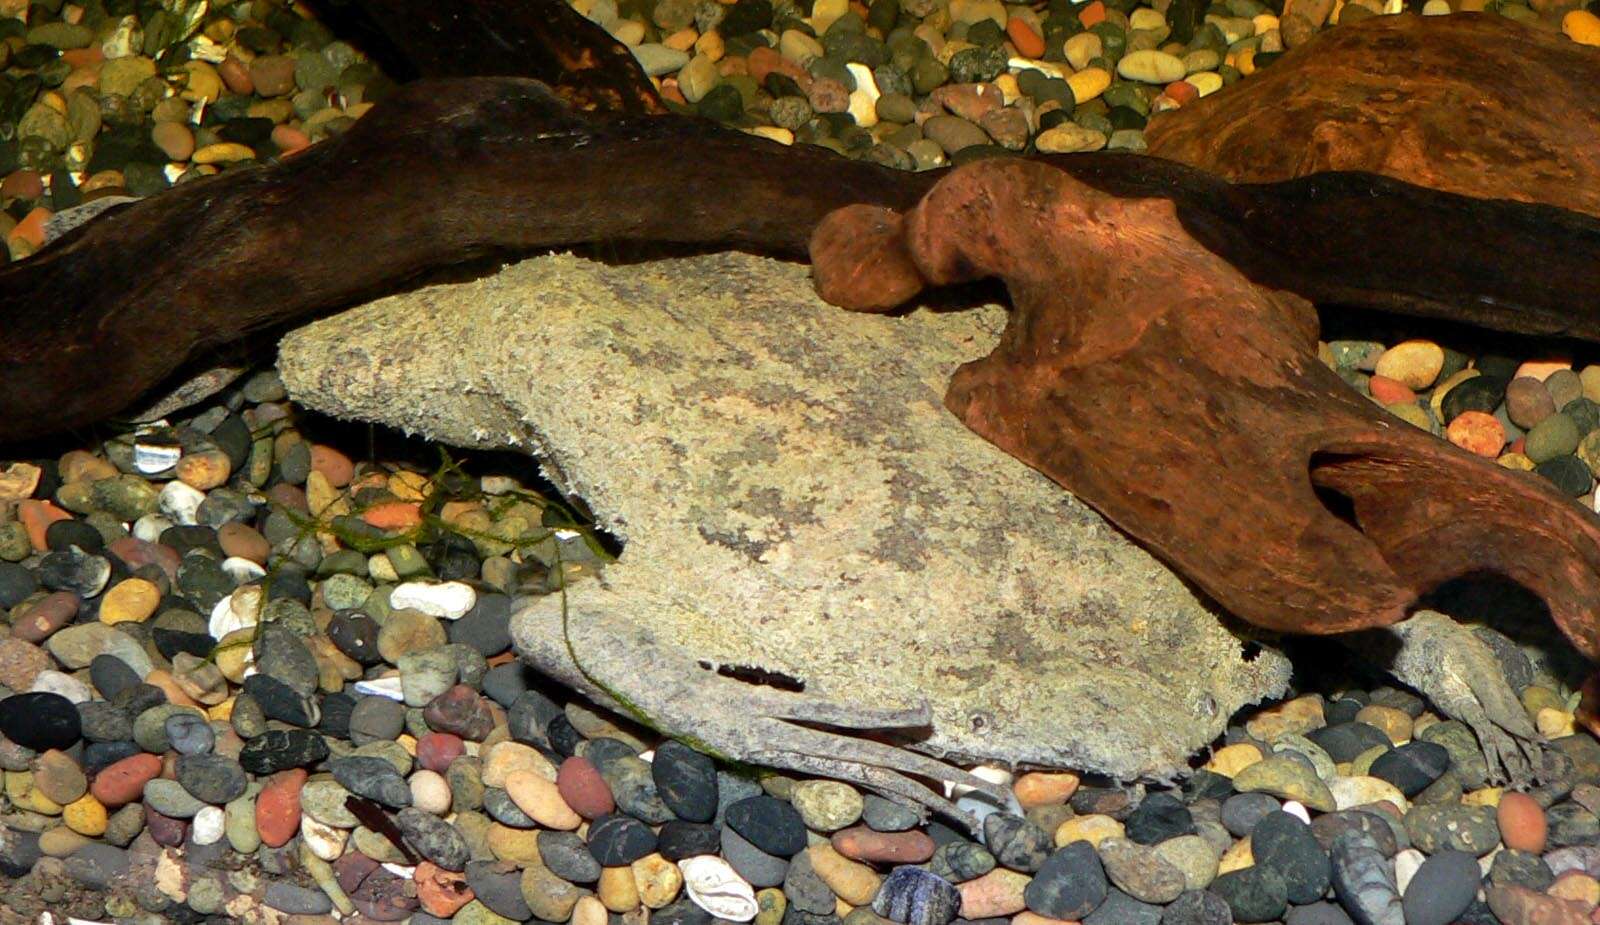 Image of Surinam toad